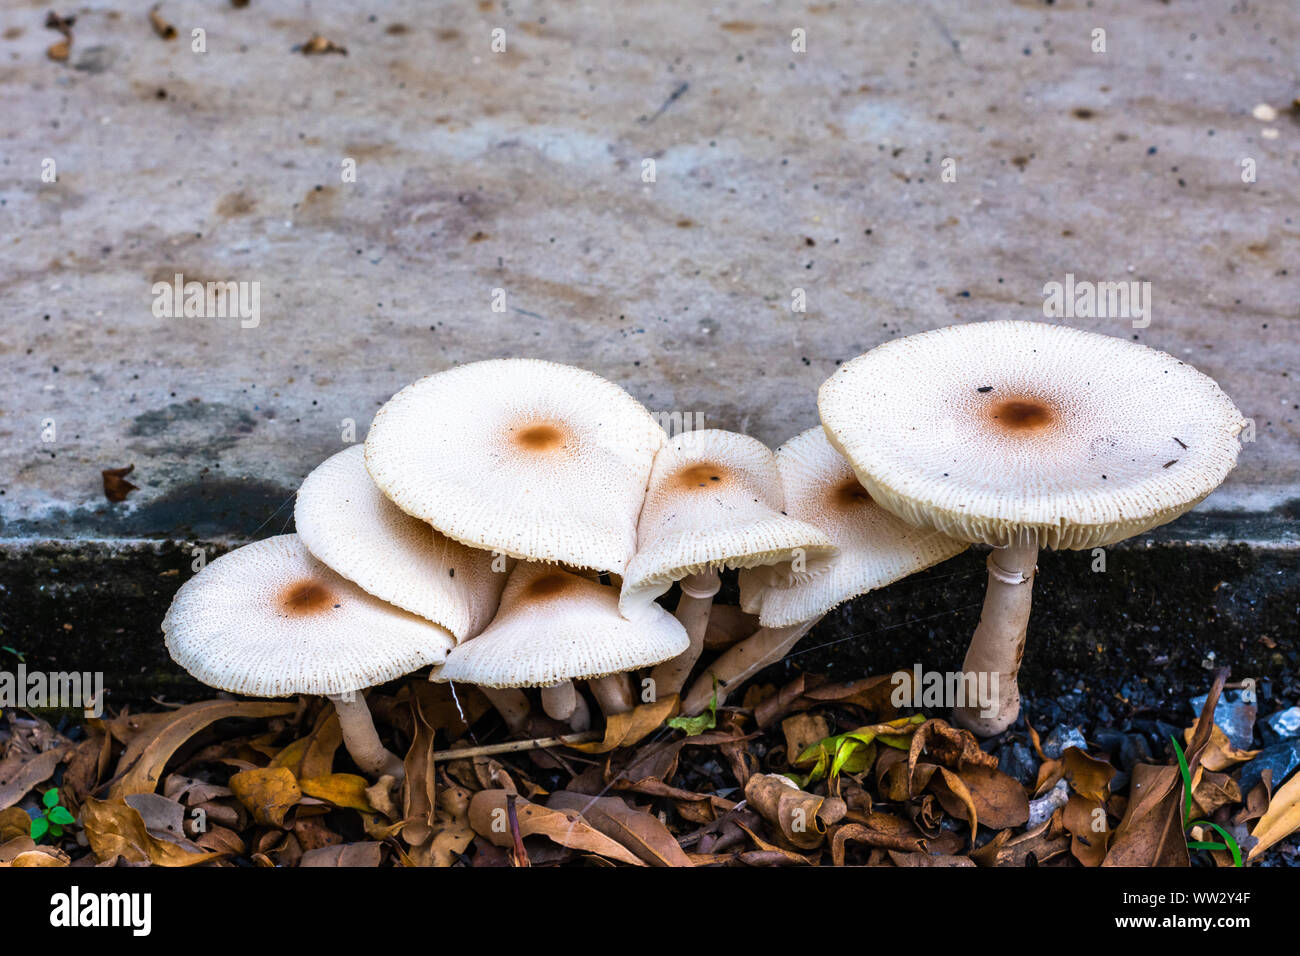 Mushrooms that bloom on the ground, Backyard. Stock Photo